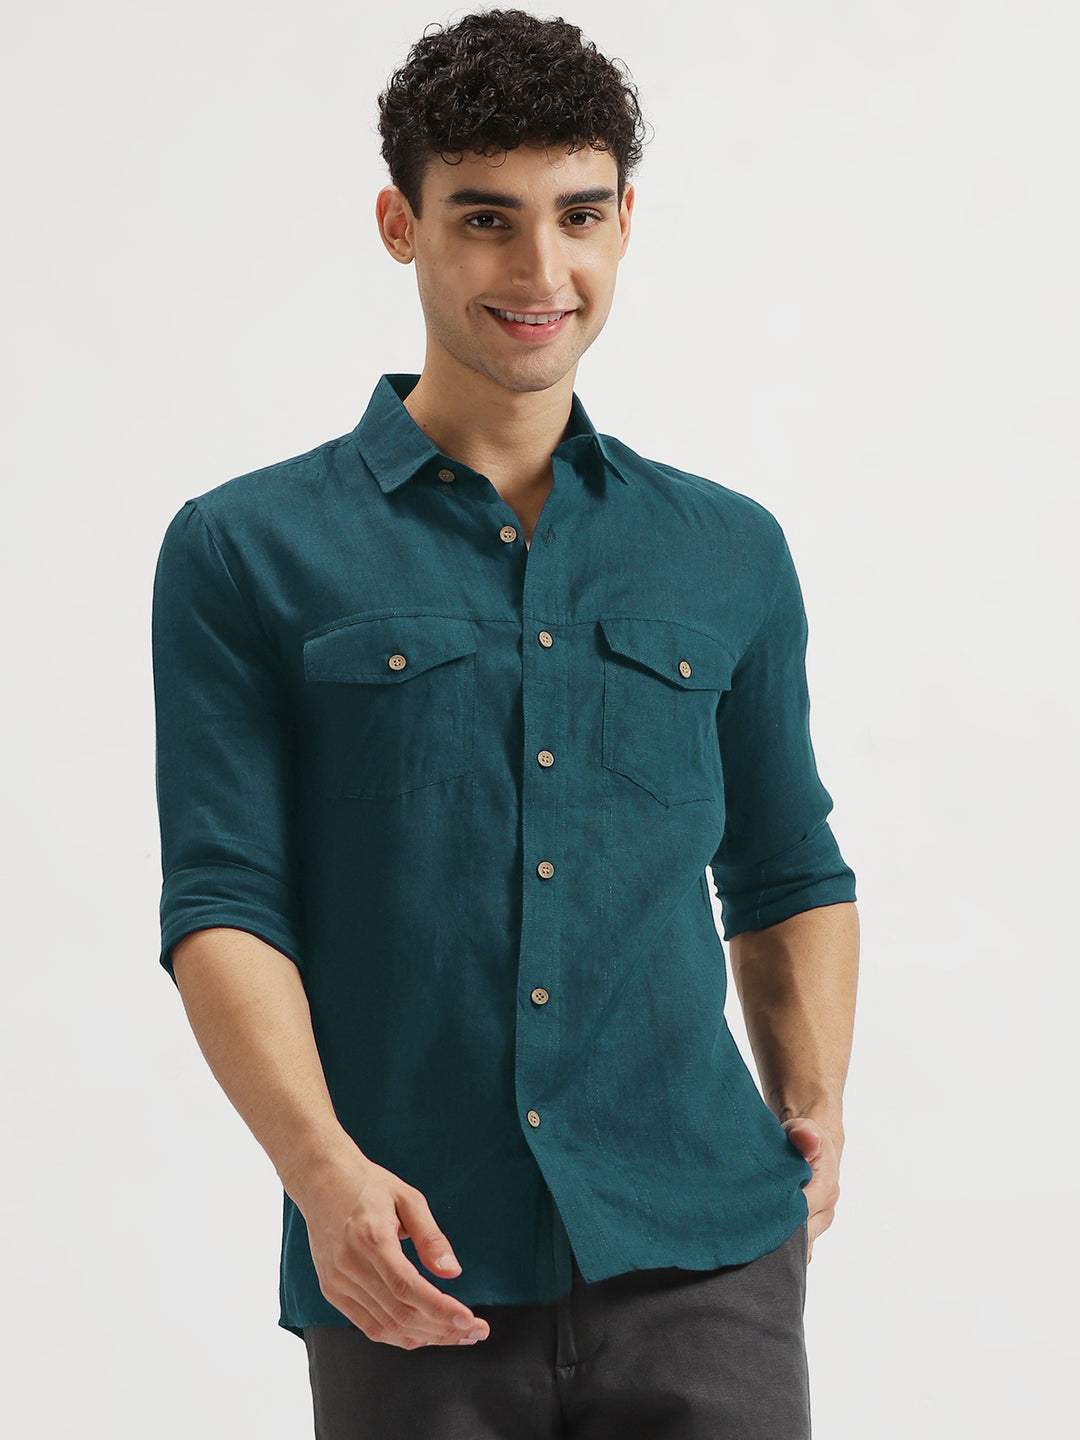 Thomas - Pure Linen Double Pocket Full Sleeve Shirt - Midnight Blue